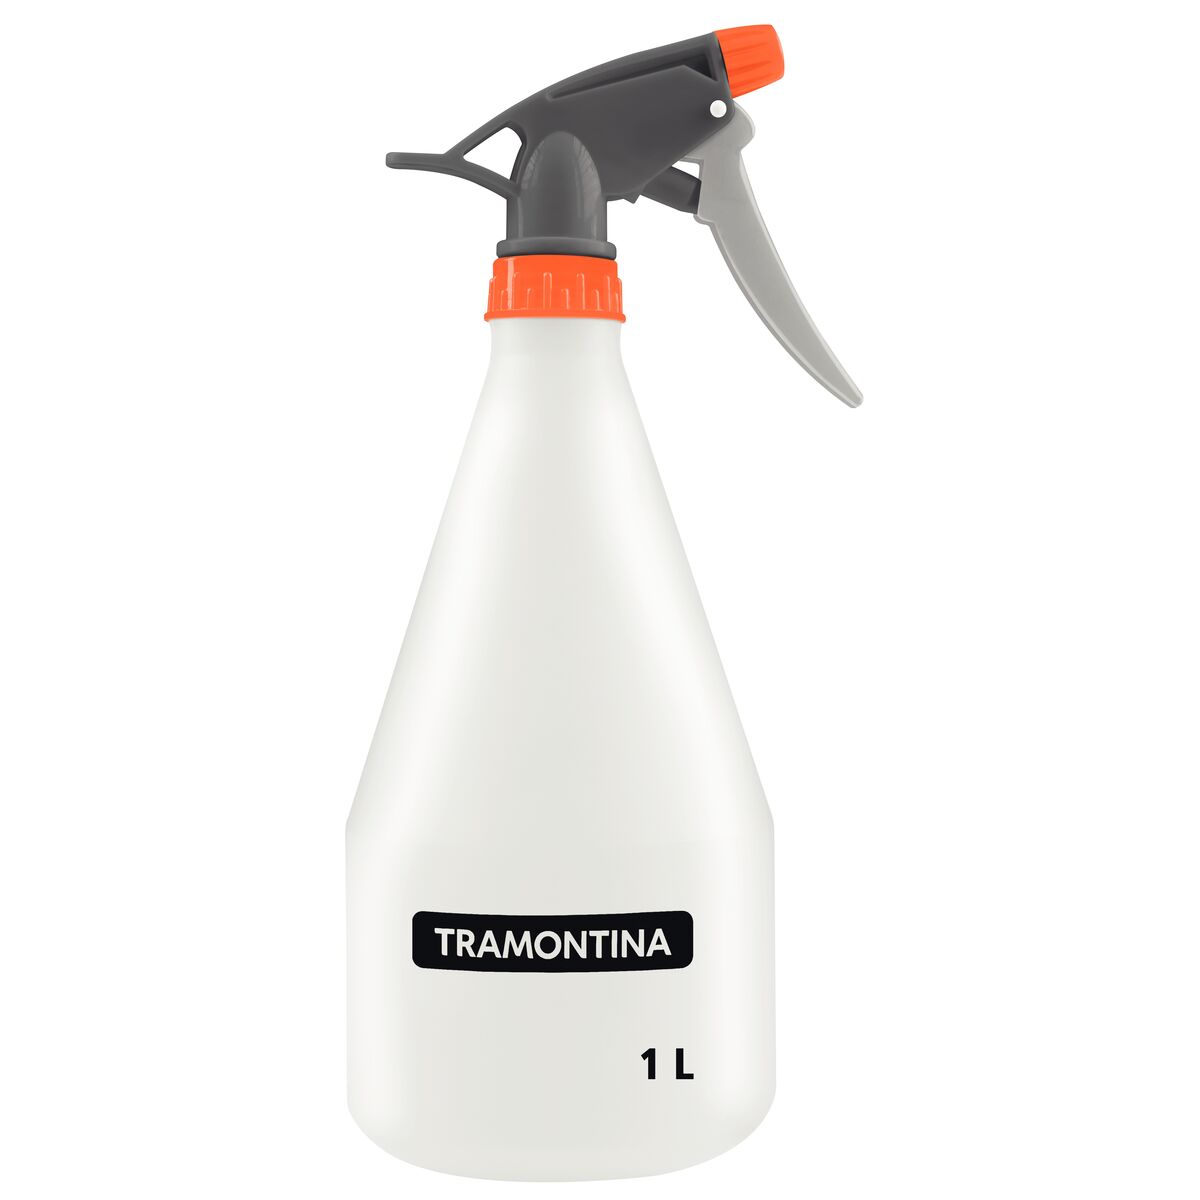 Tramontina 1-L Plastic Manual Sprayer